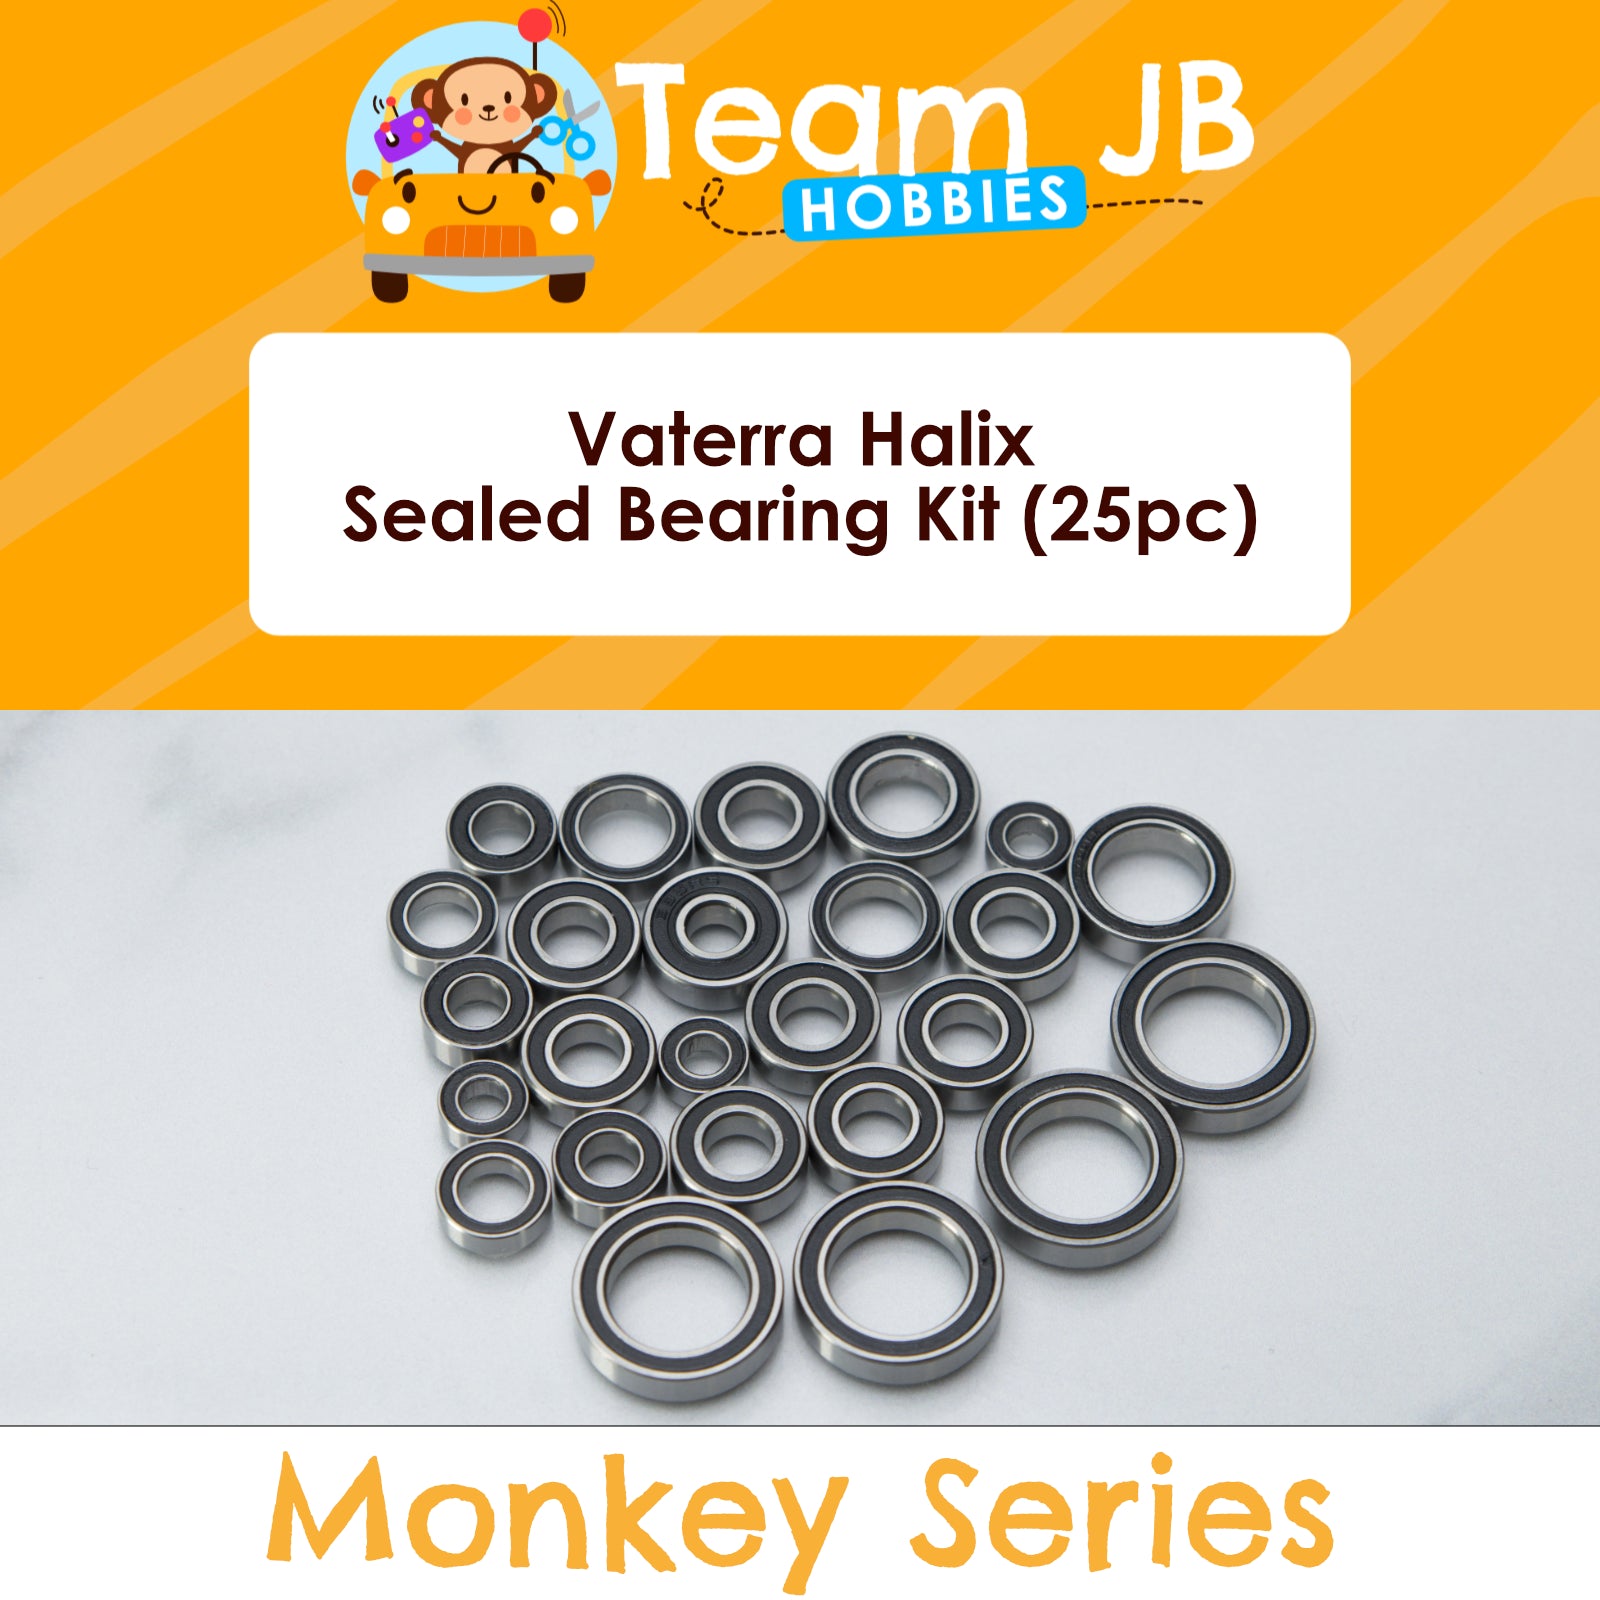 Vaterra Halix - Sealed Bearing Kit